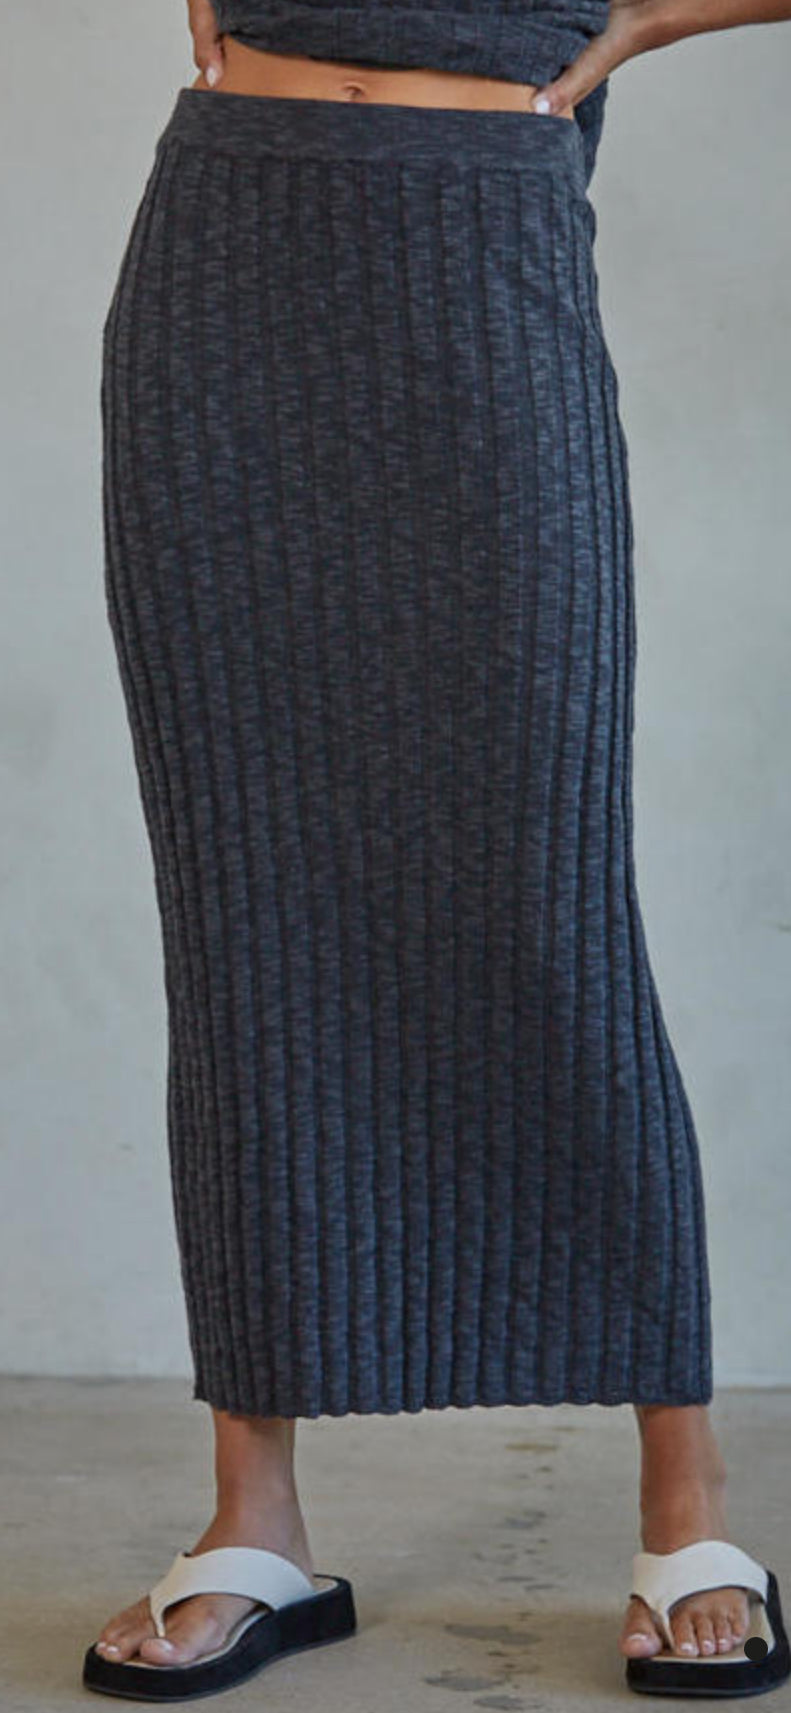 Ribbed Knit Pencil Skirt